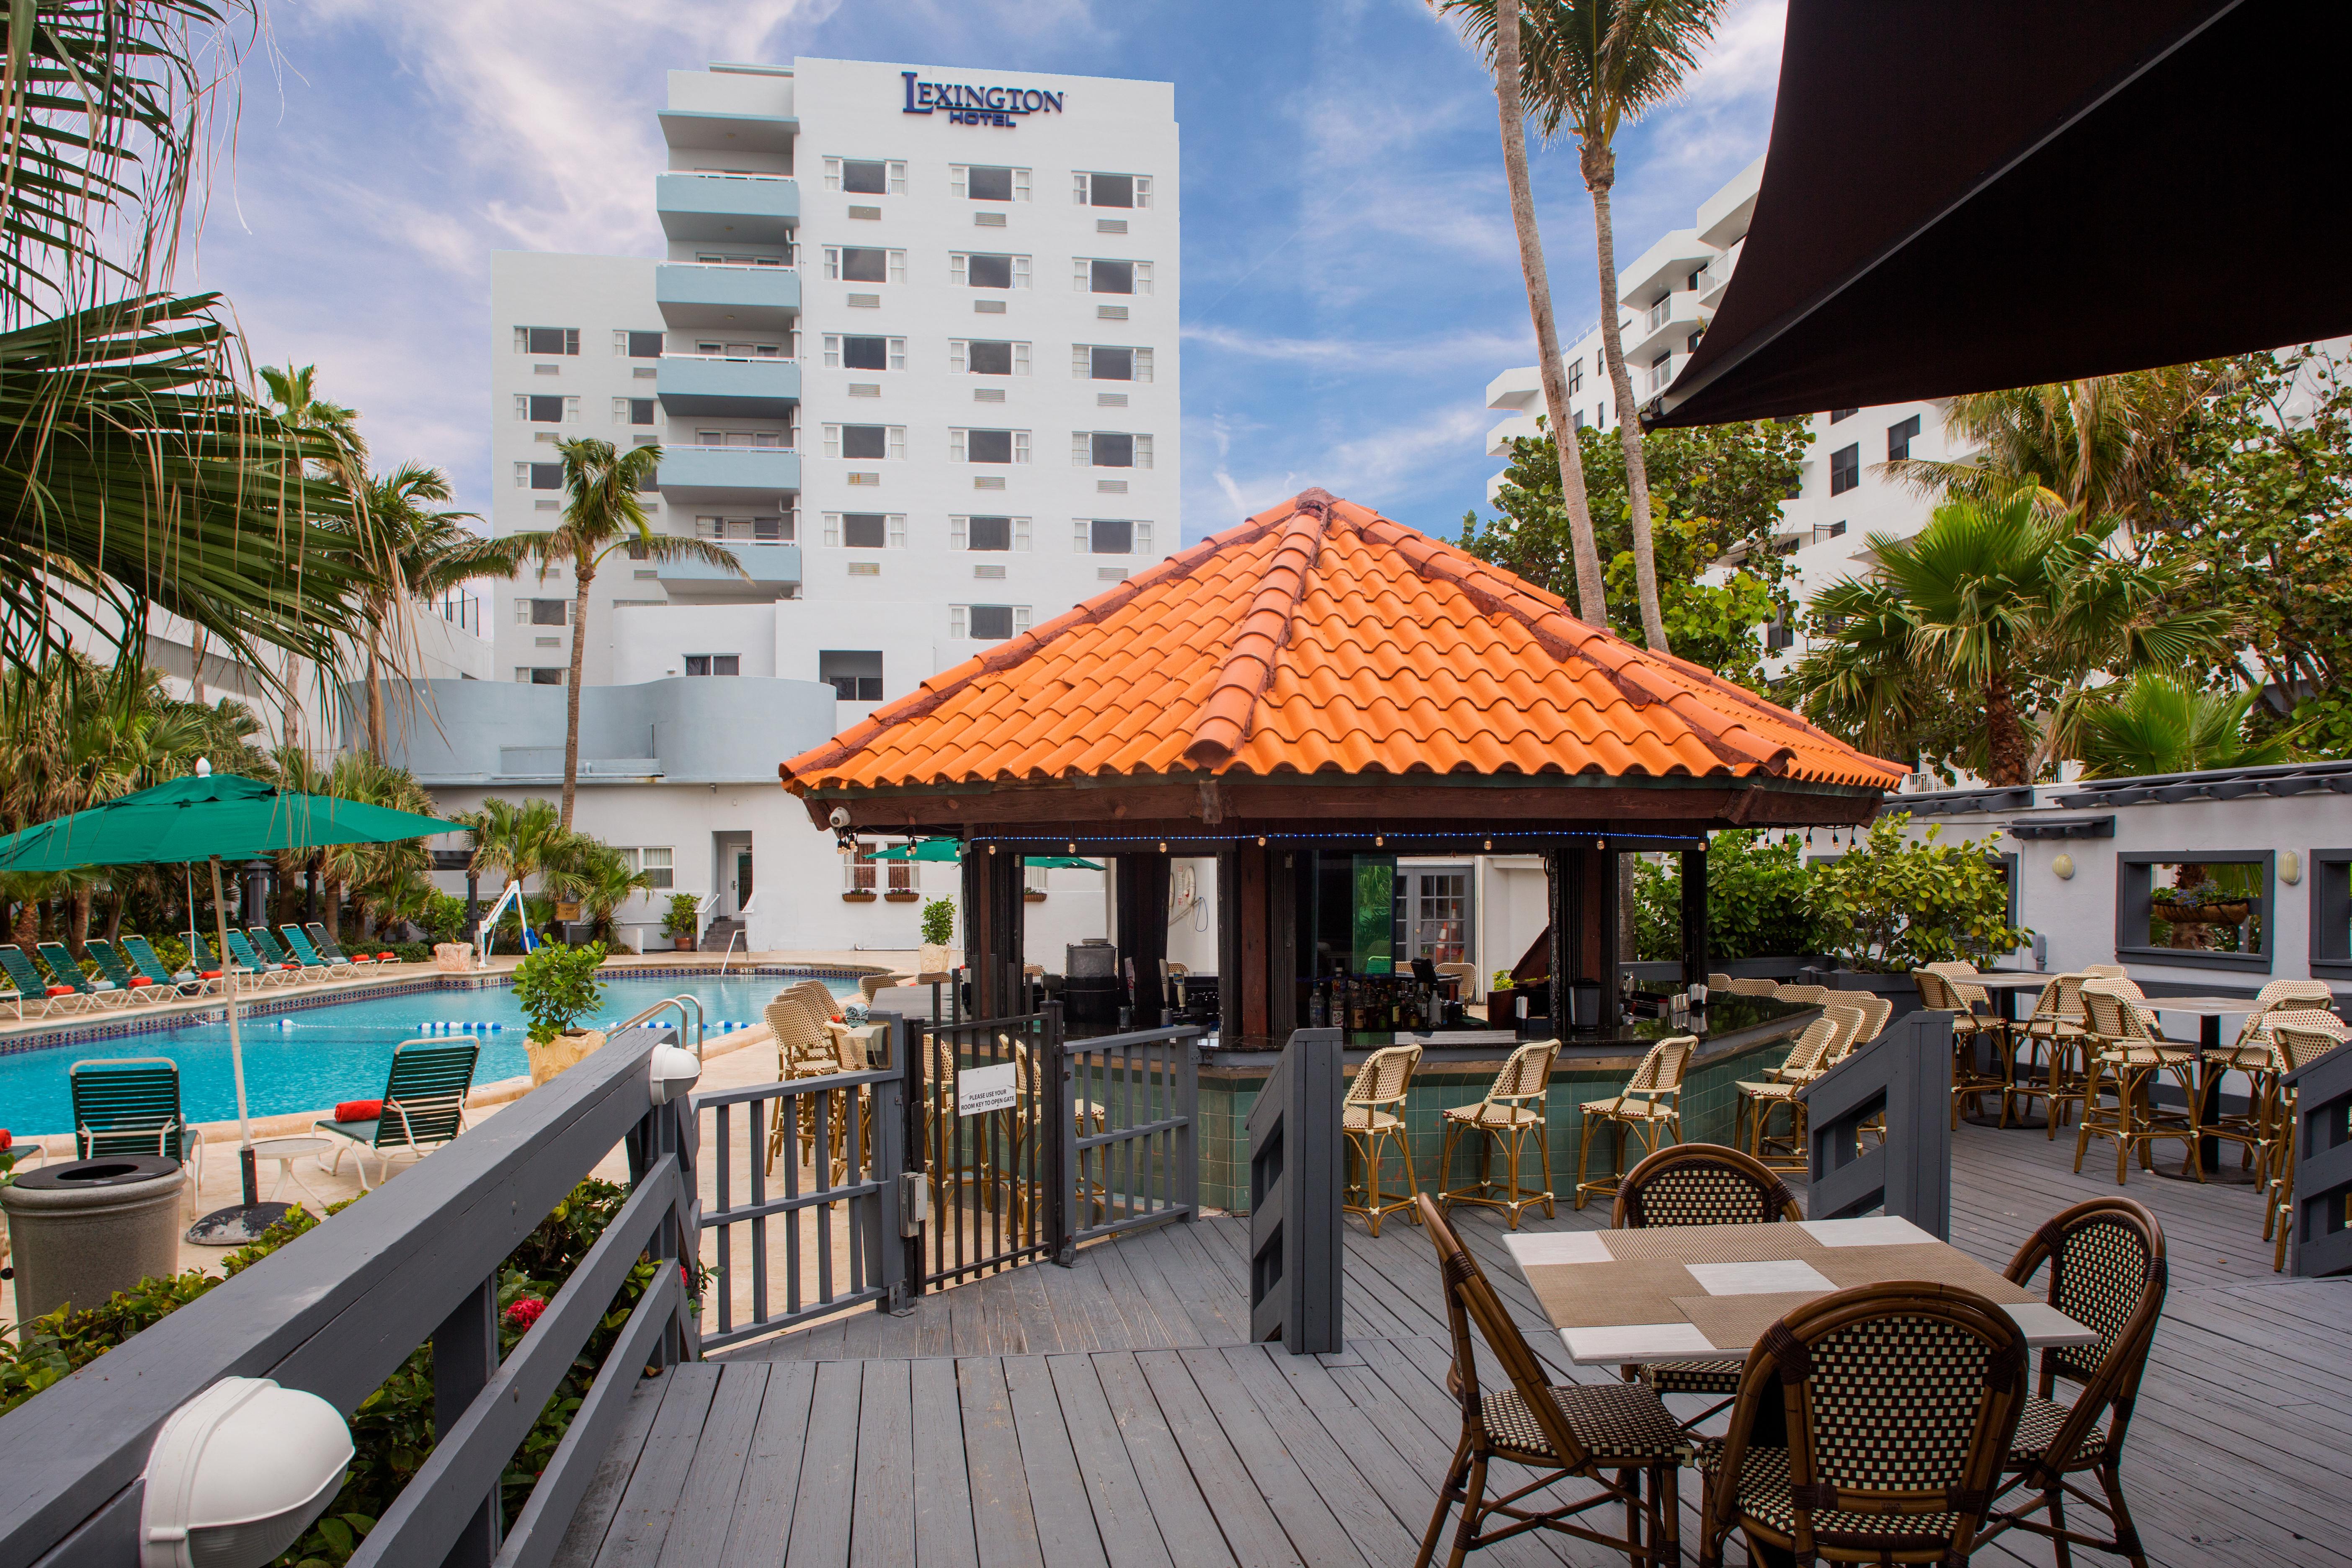 Lexington By Hotel Rl Miami Beach Exterior foto